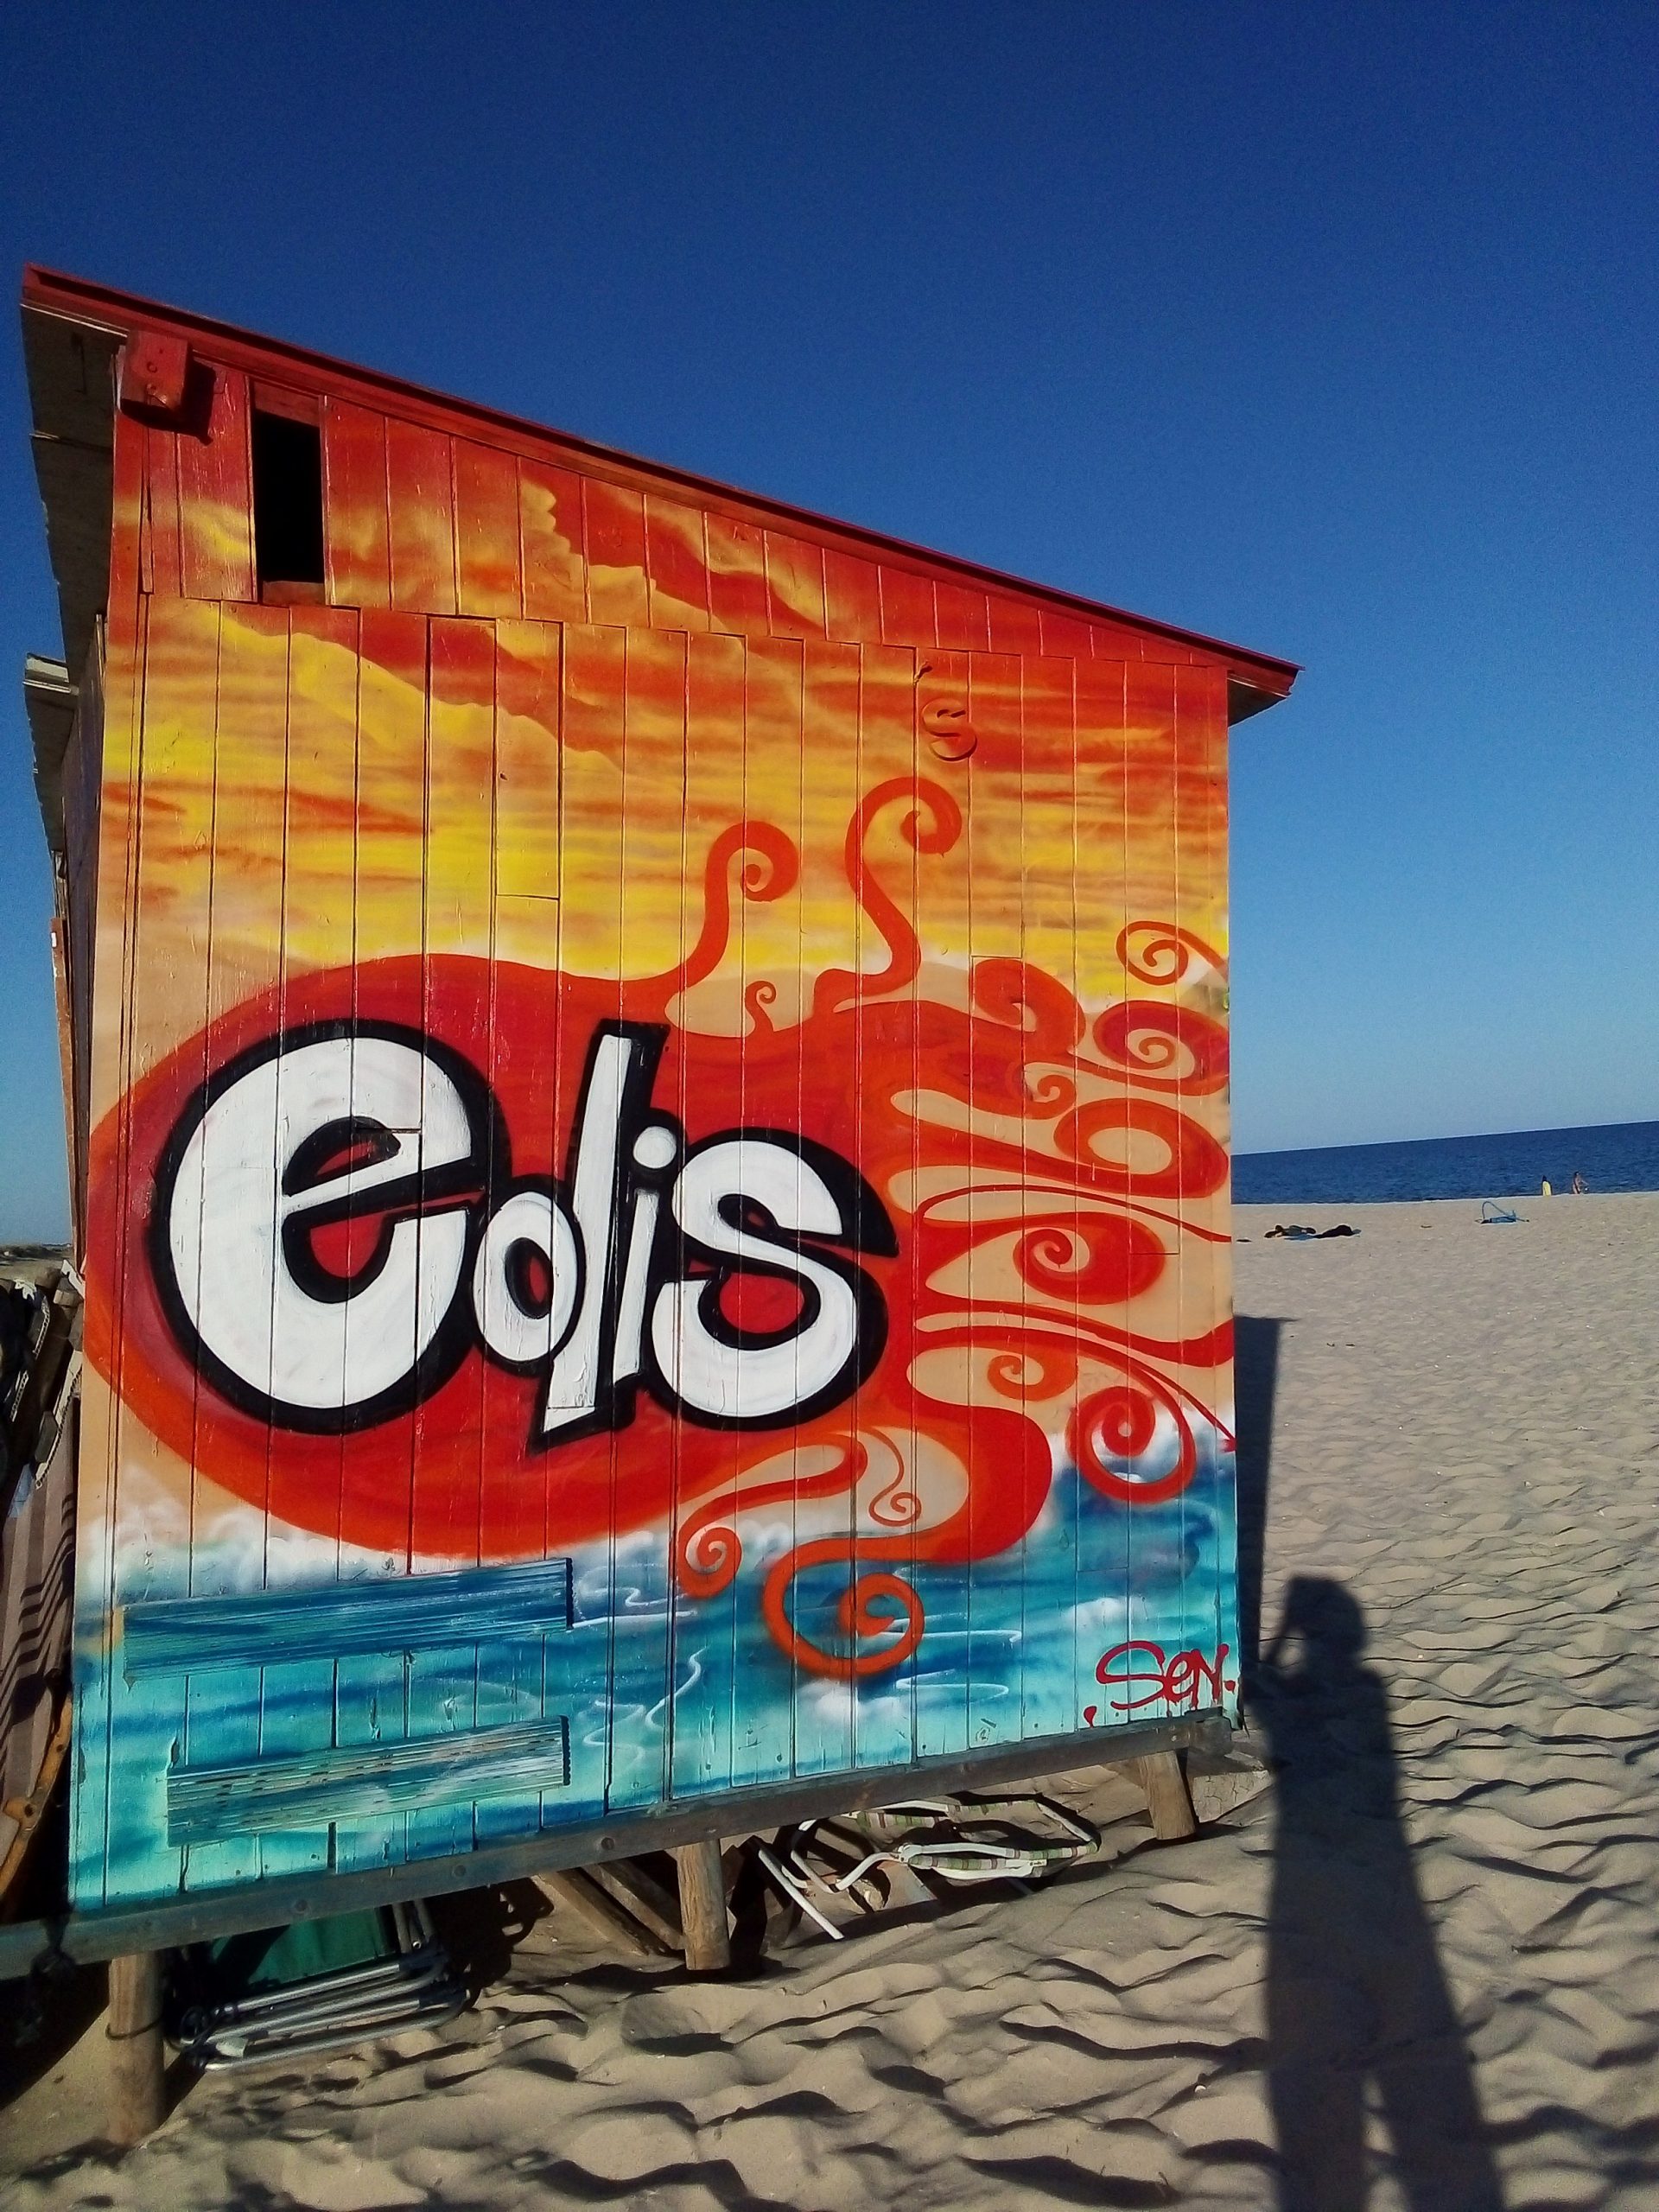 Eolis Beach Cabin 2020